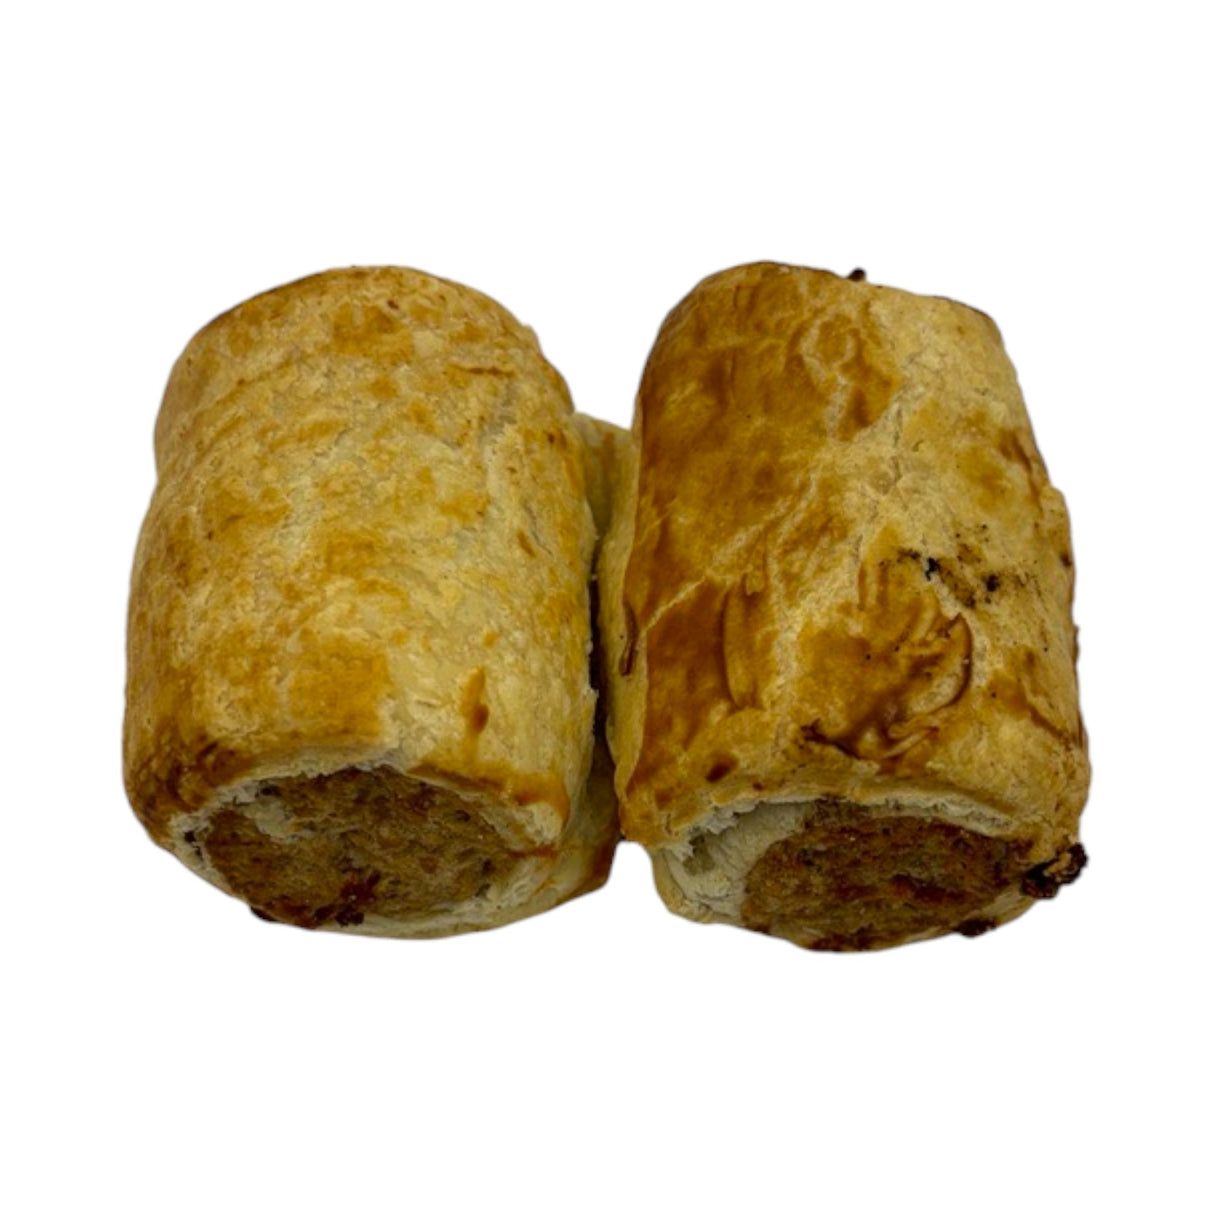 Kingleys - Handmade Free Range Pork Sausage Roll (Twin Pack)